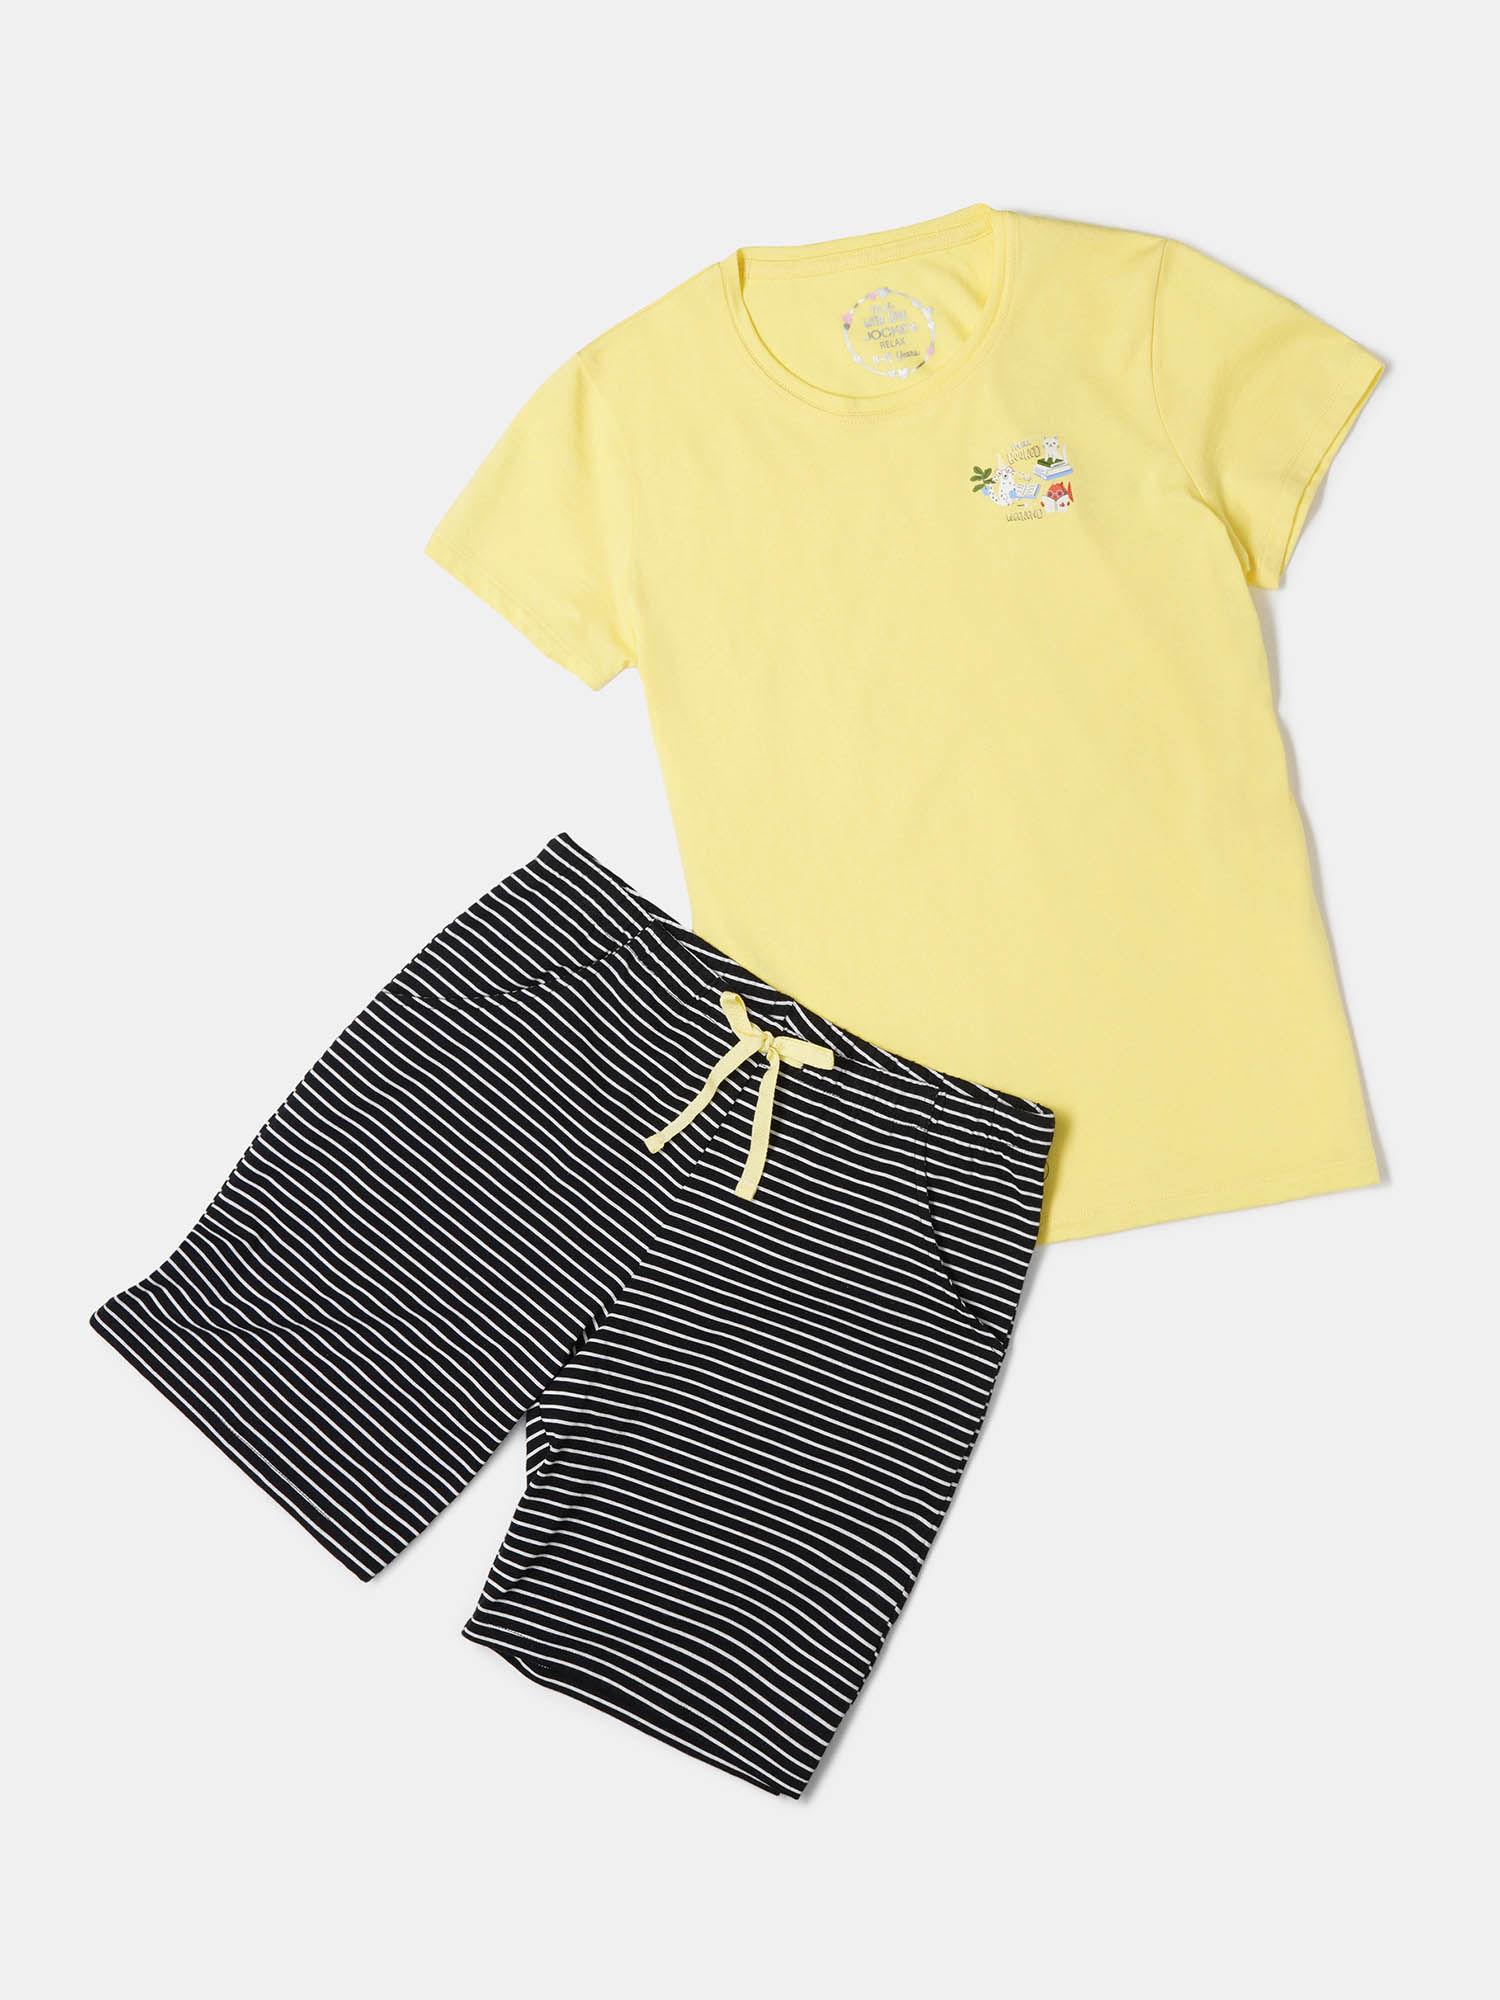 rg11-girl's-cotton-shorts-&-t-shirt-yellow-&-black-(set-of-2)